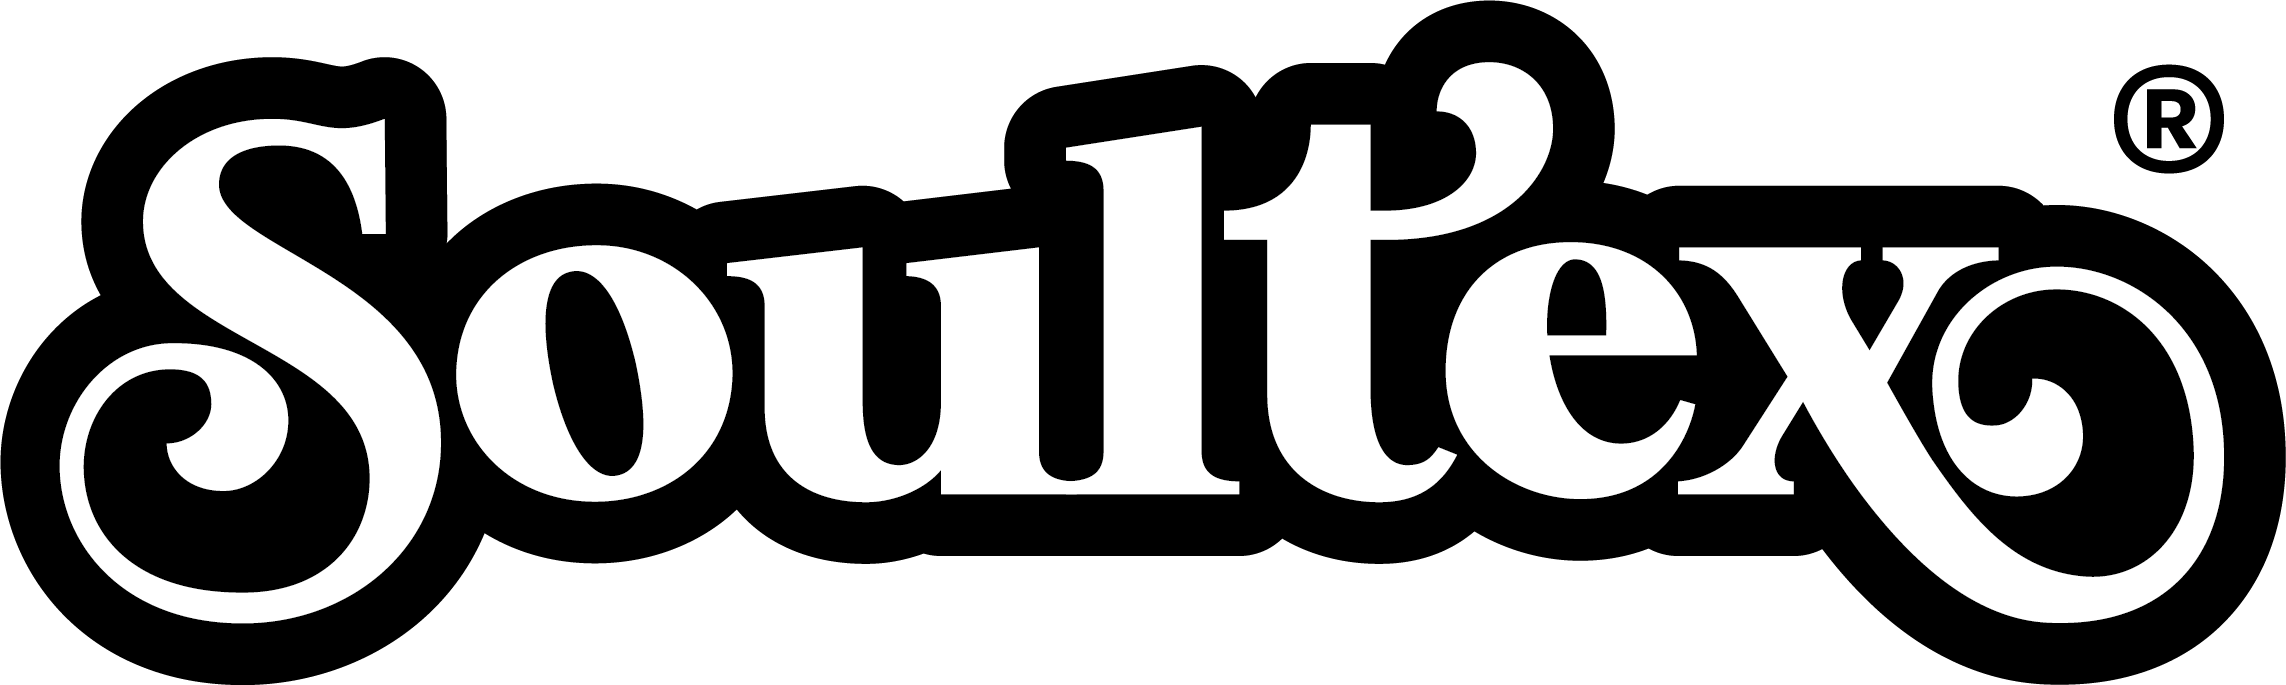 SoulTex GmbH - 